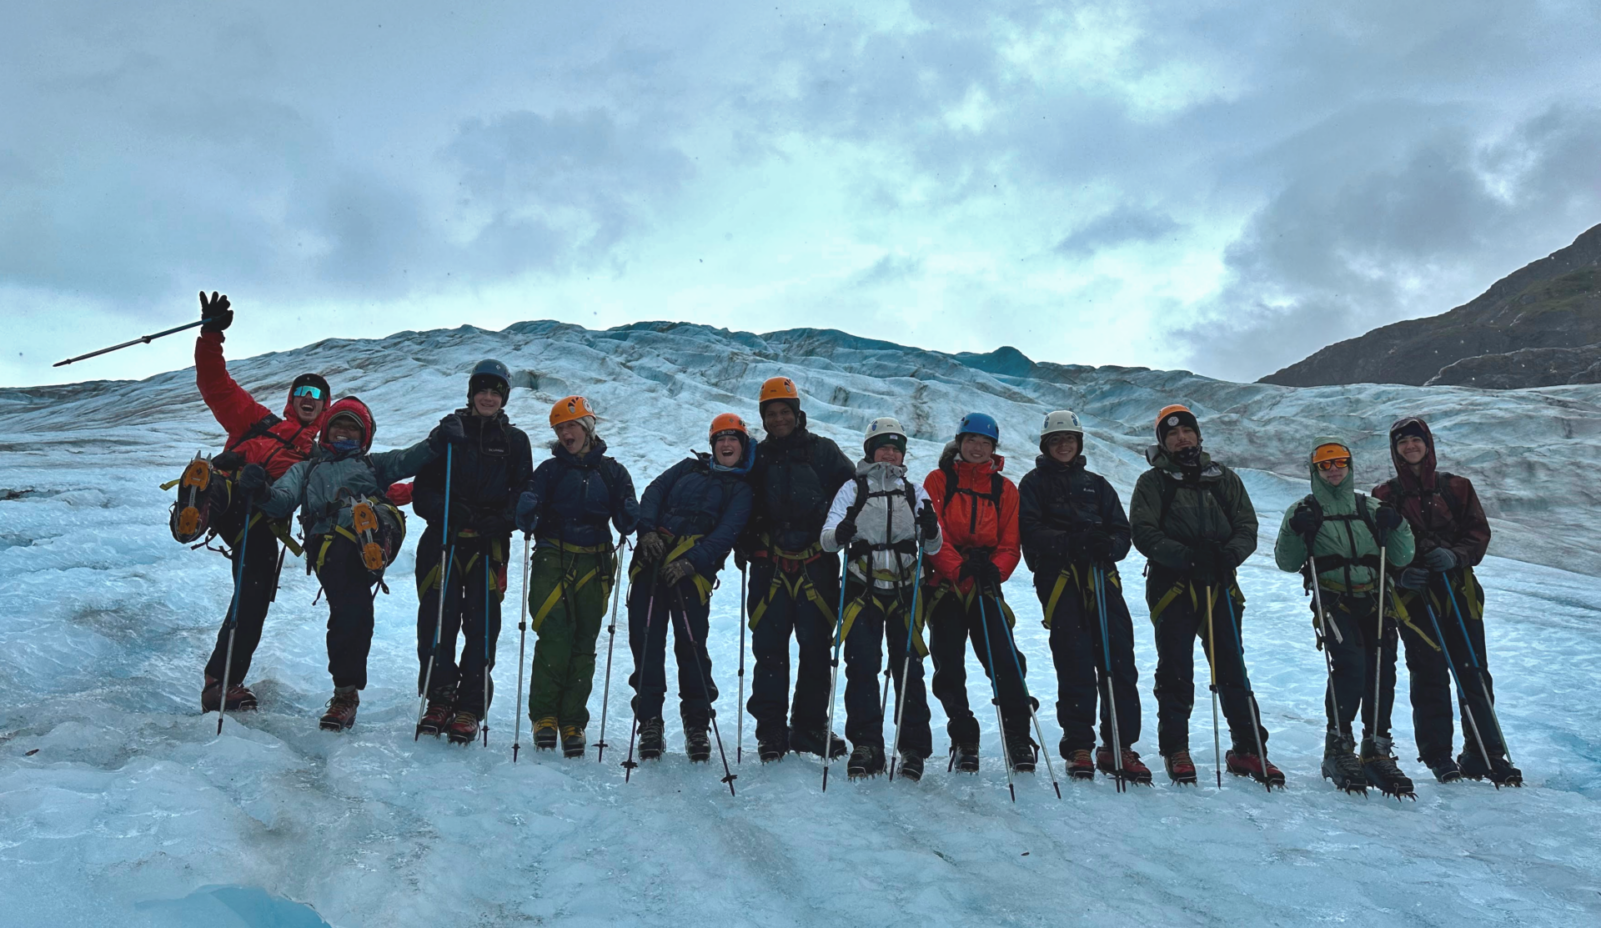 Ice climbing and glacier exploration in Alaska